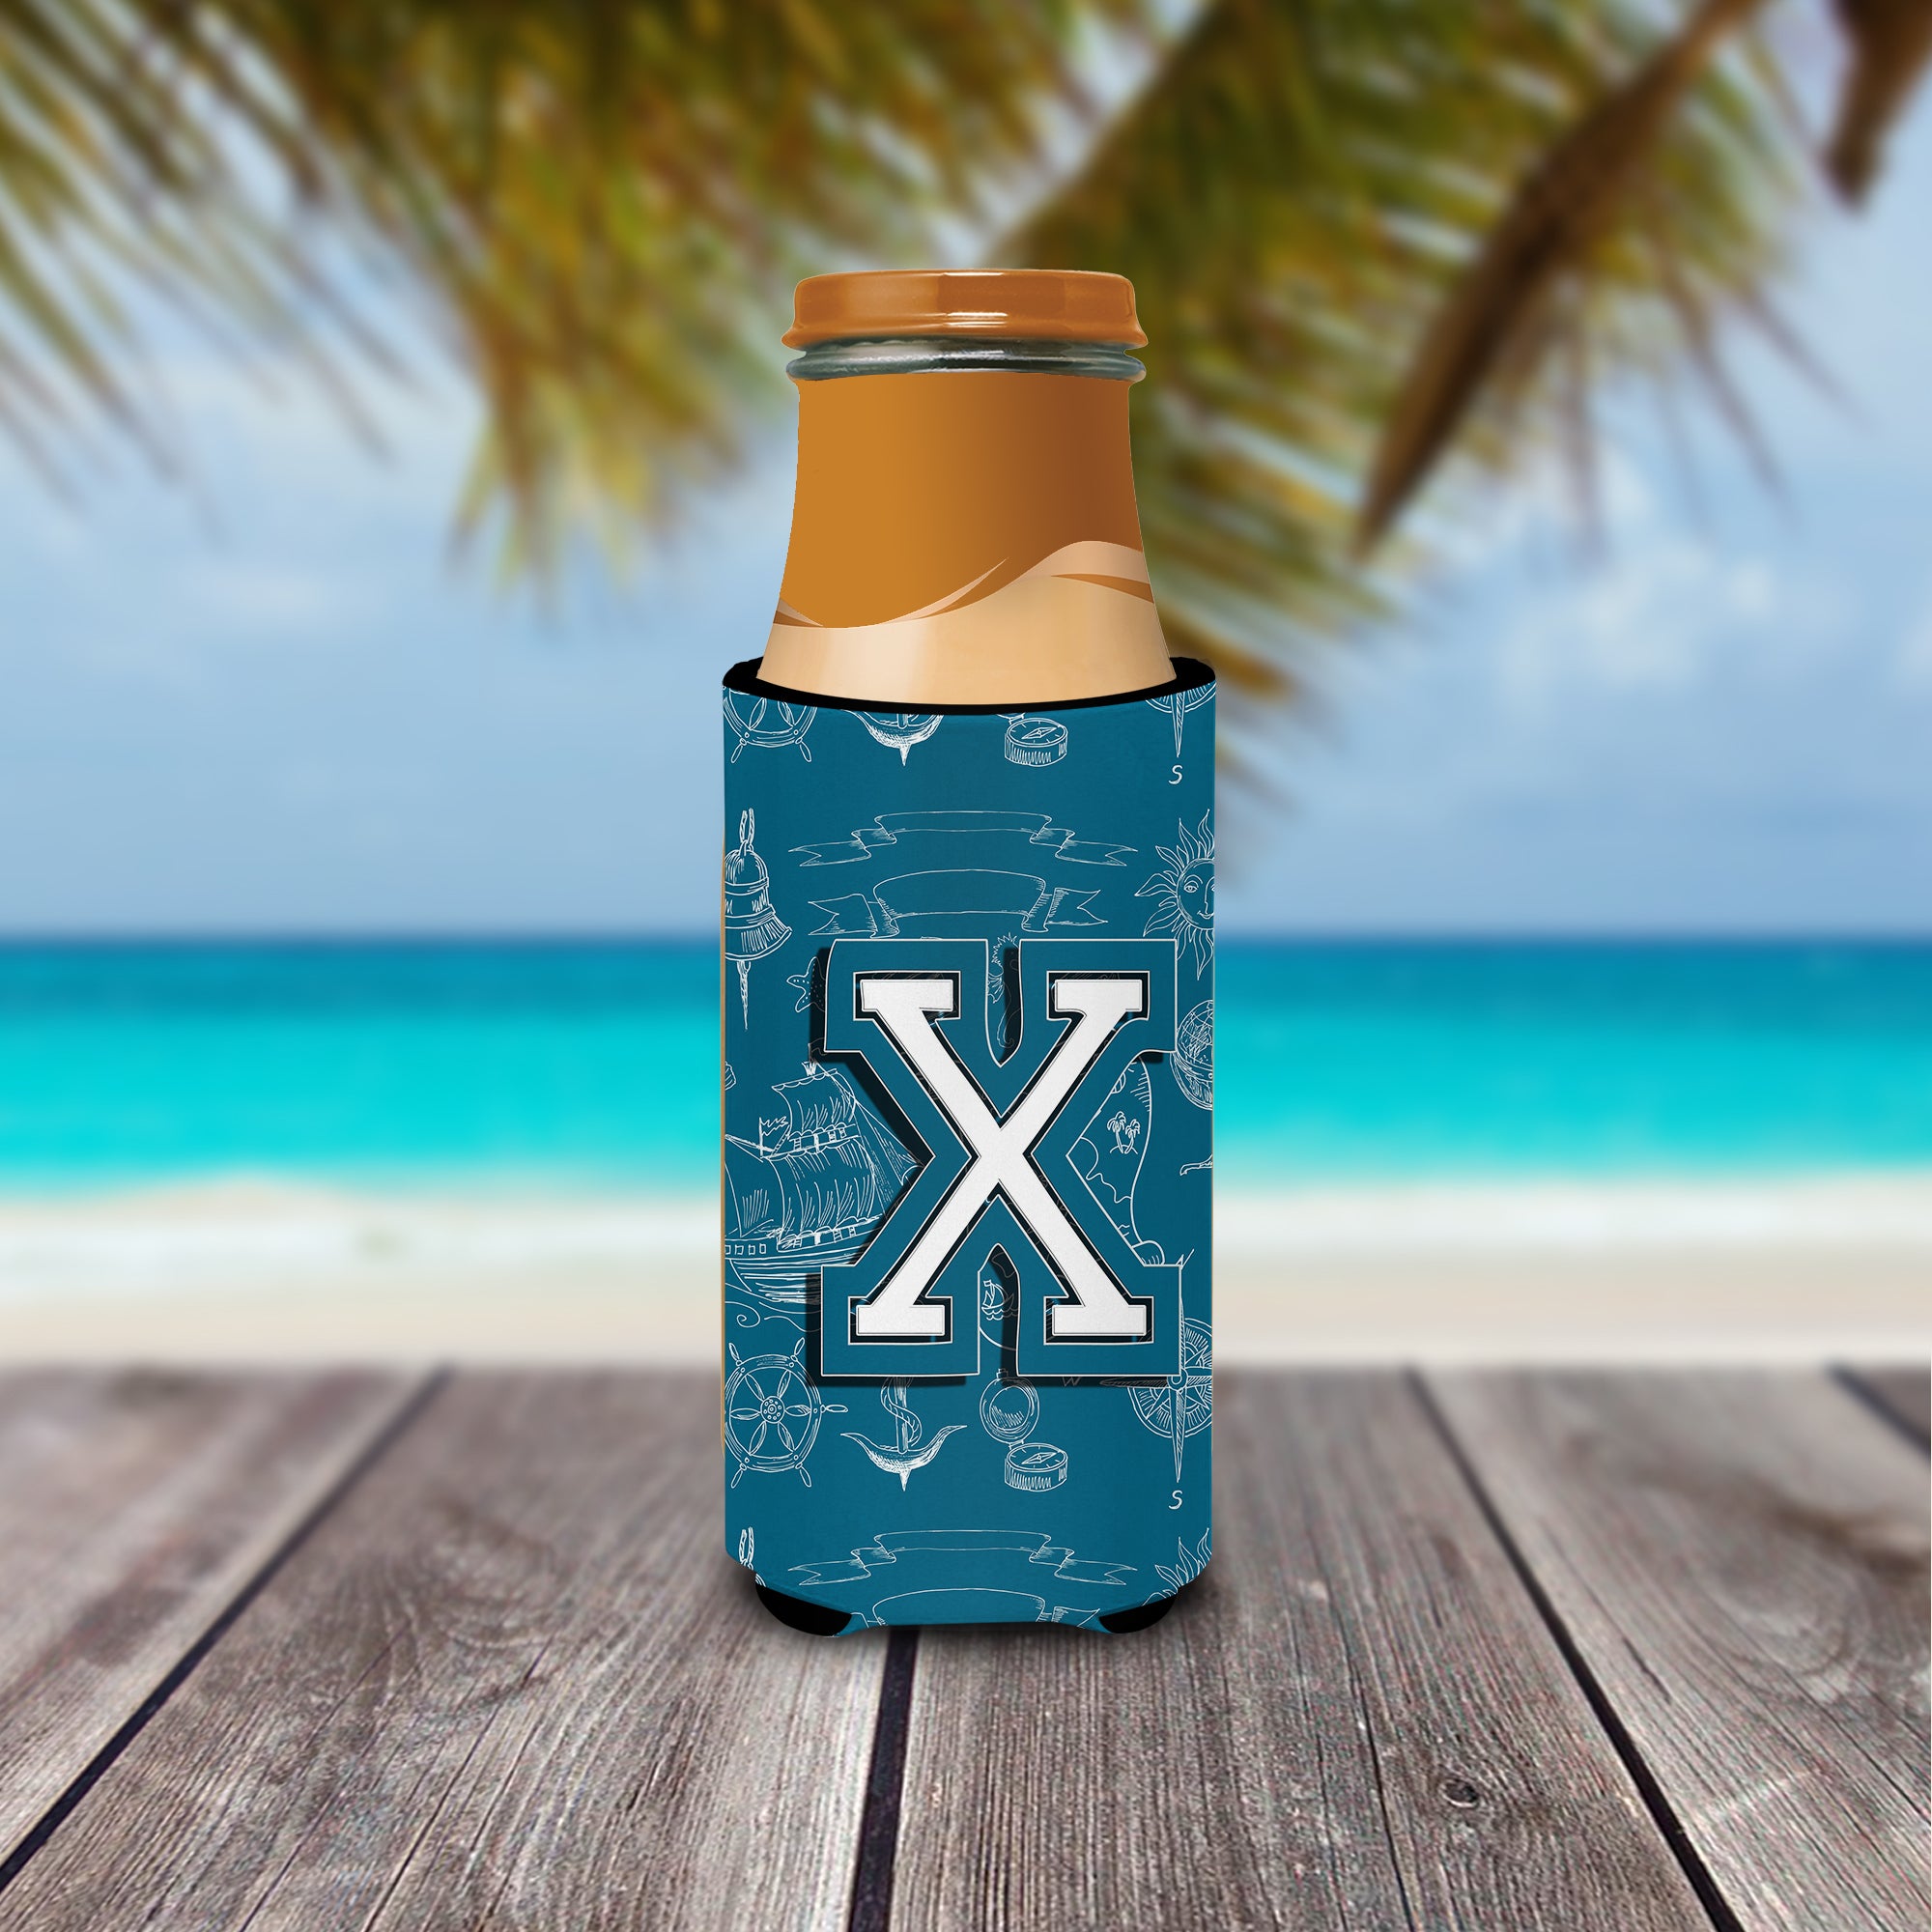 Letter X Sea Doodles Initial Alphabet Ultra Beverage Insulators for slim cans CJ2014-XMUK